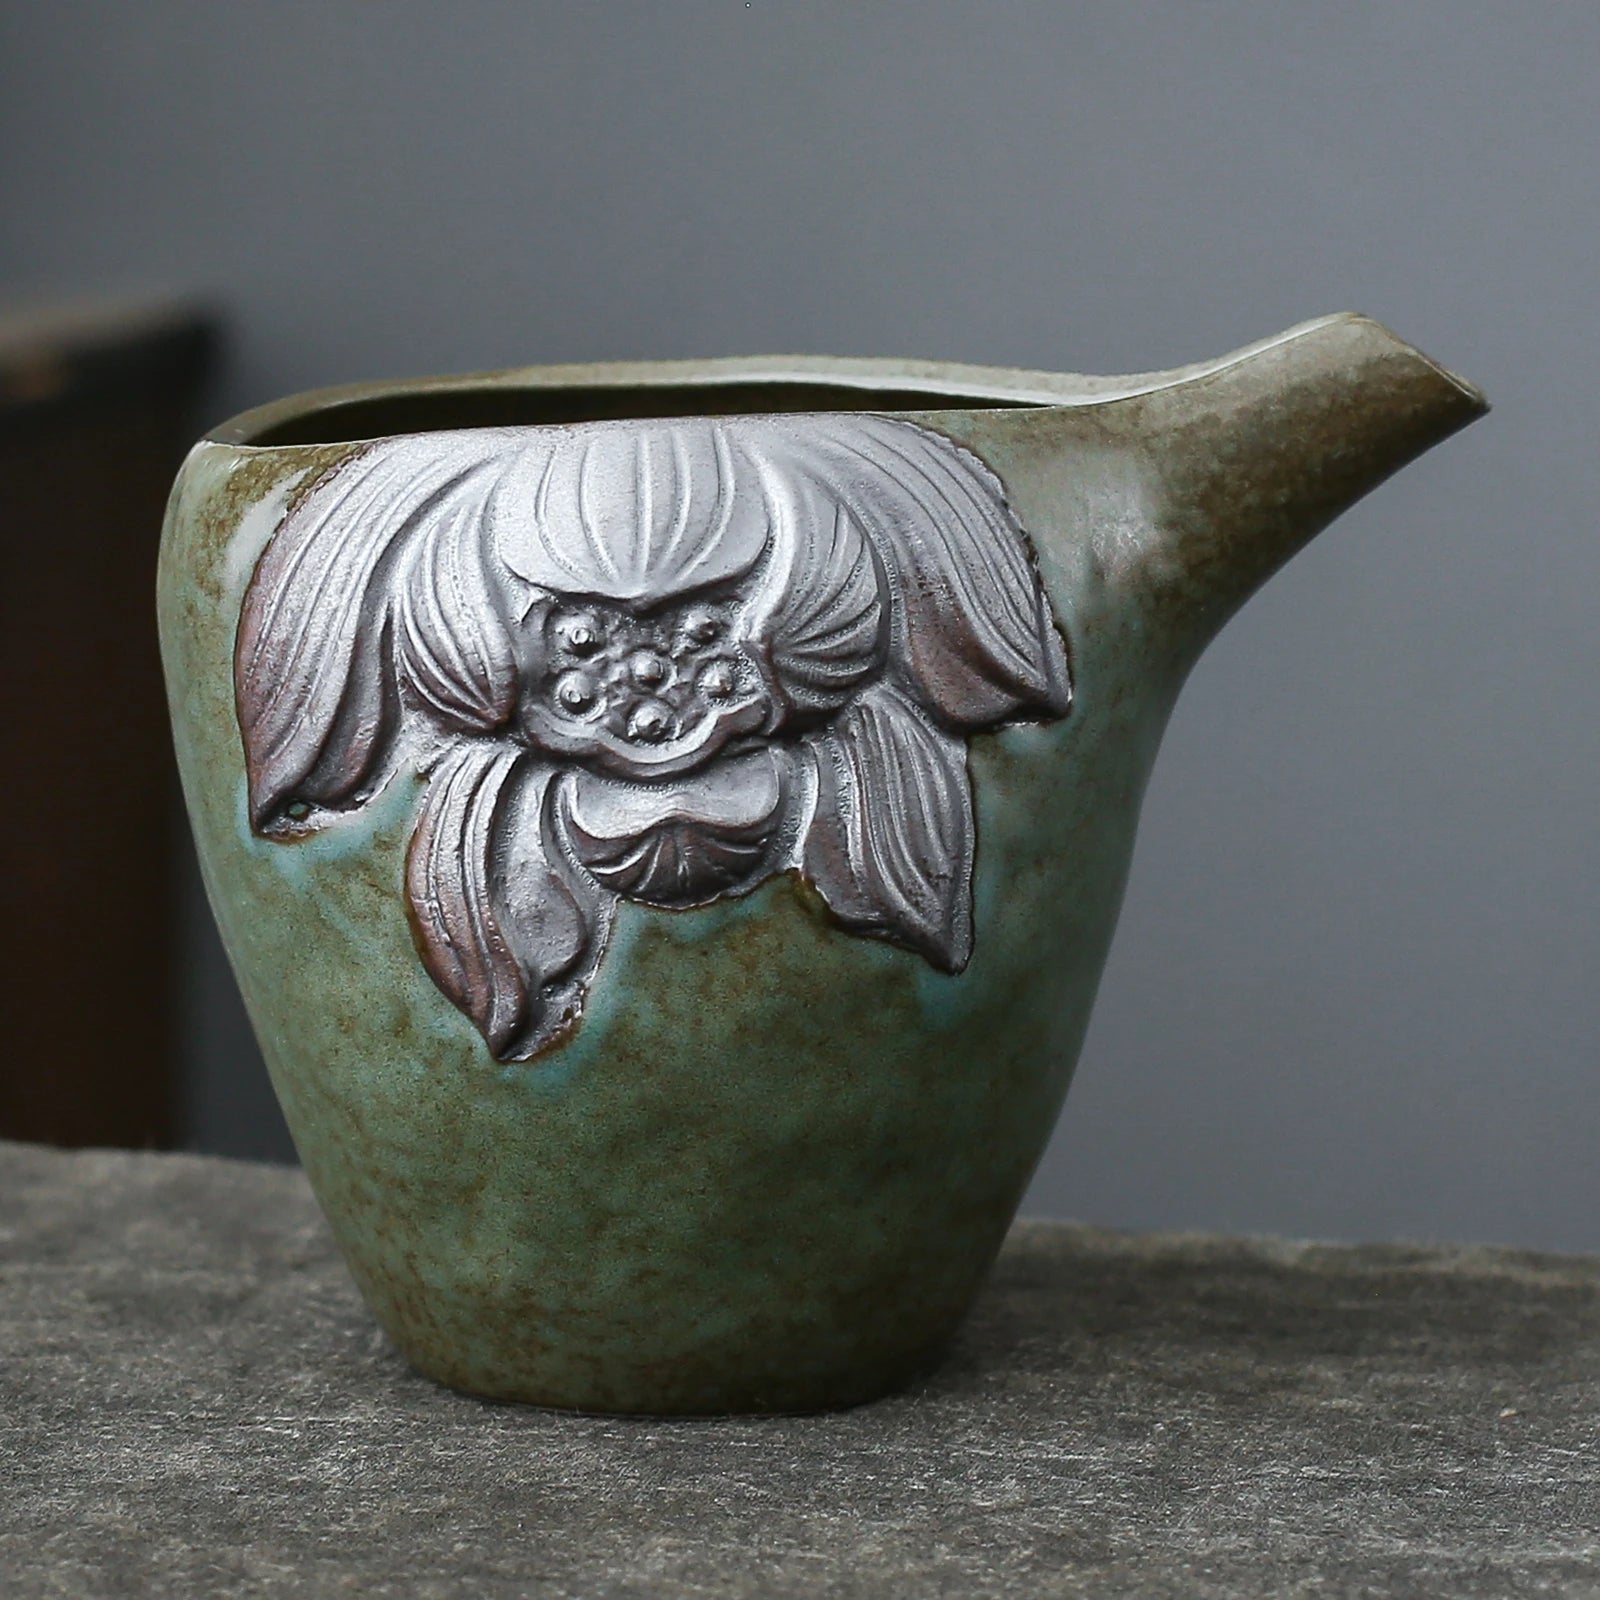 Handmade Vintage Ceramic Fair Cup Japanese Style Tea Ware